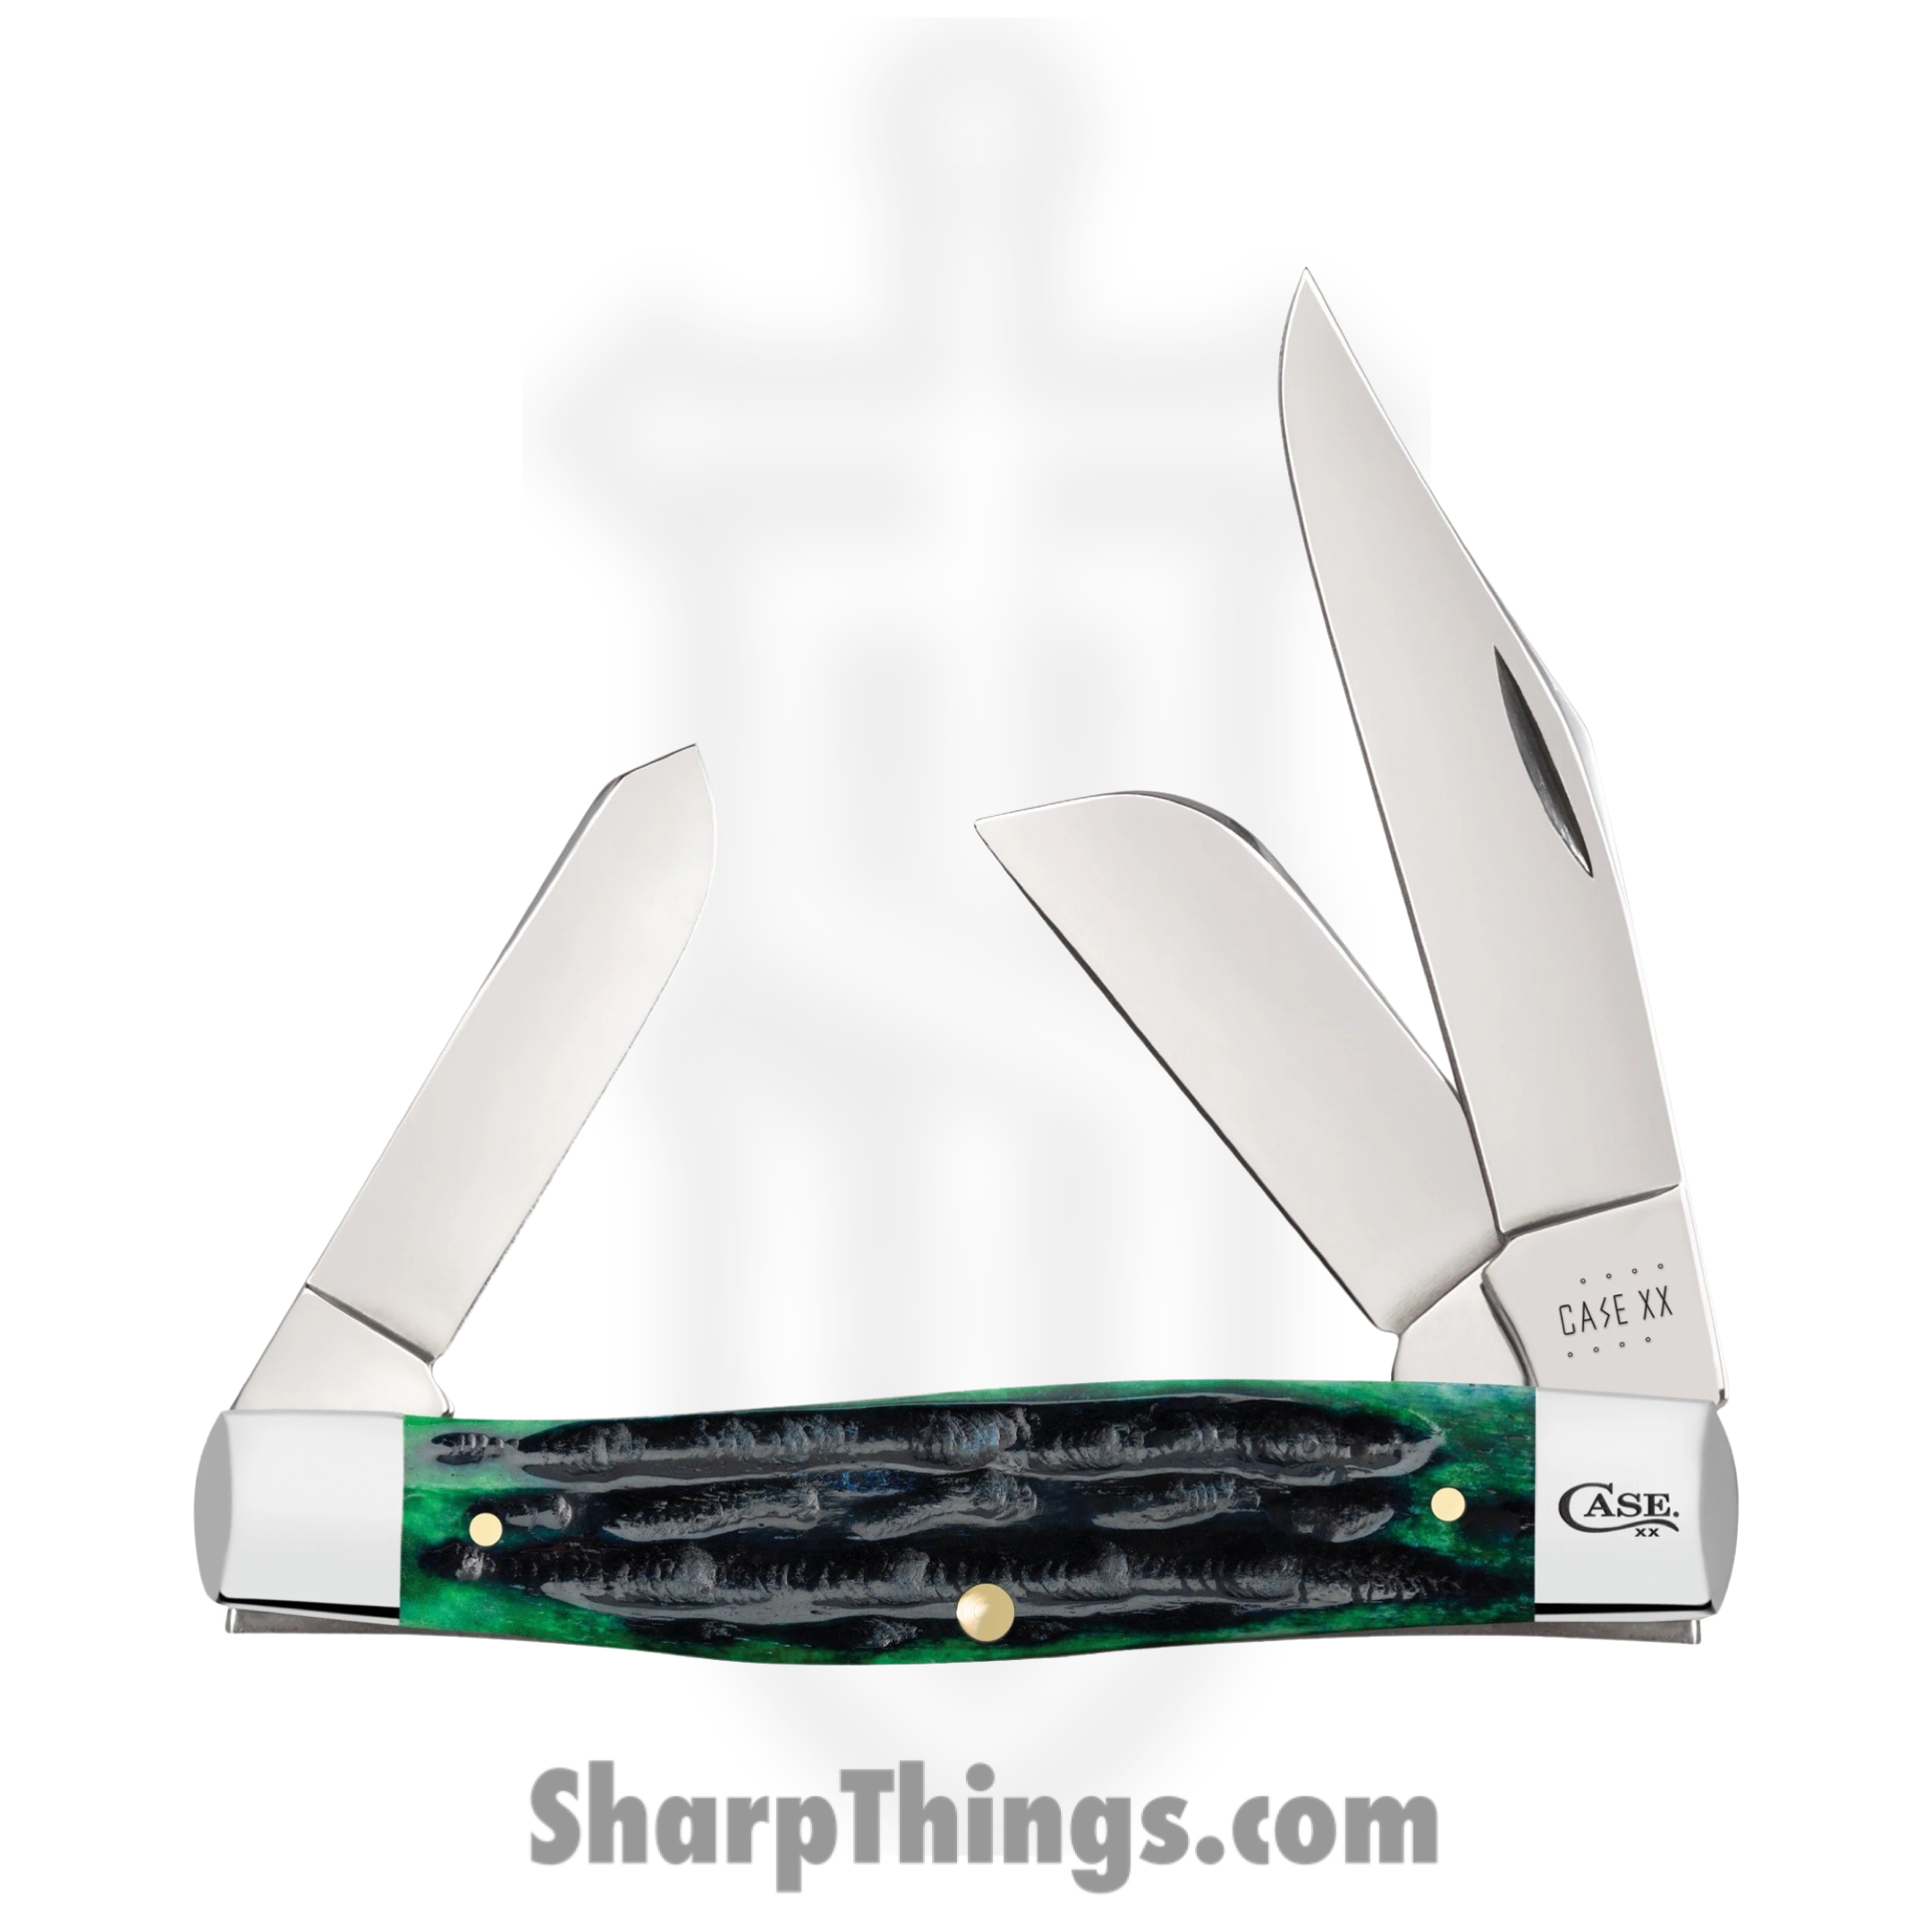 Case Large Stockman 3.3 inch Folding Knife